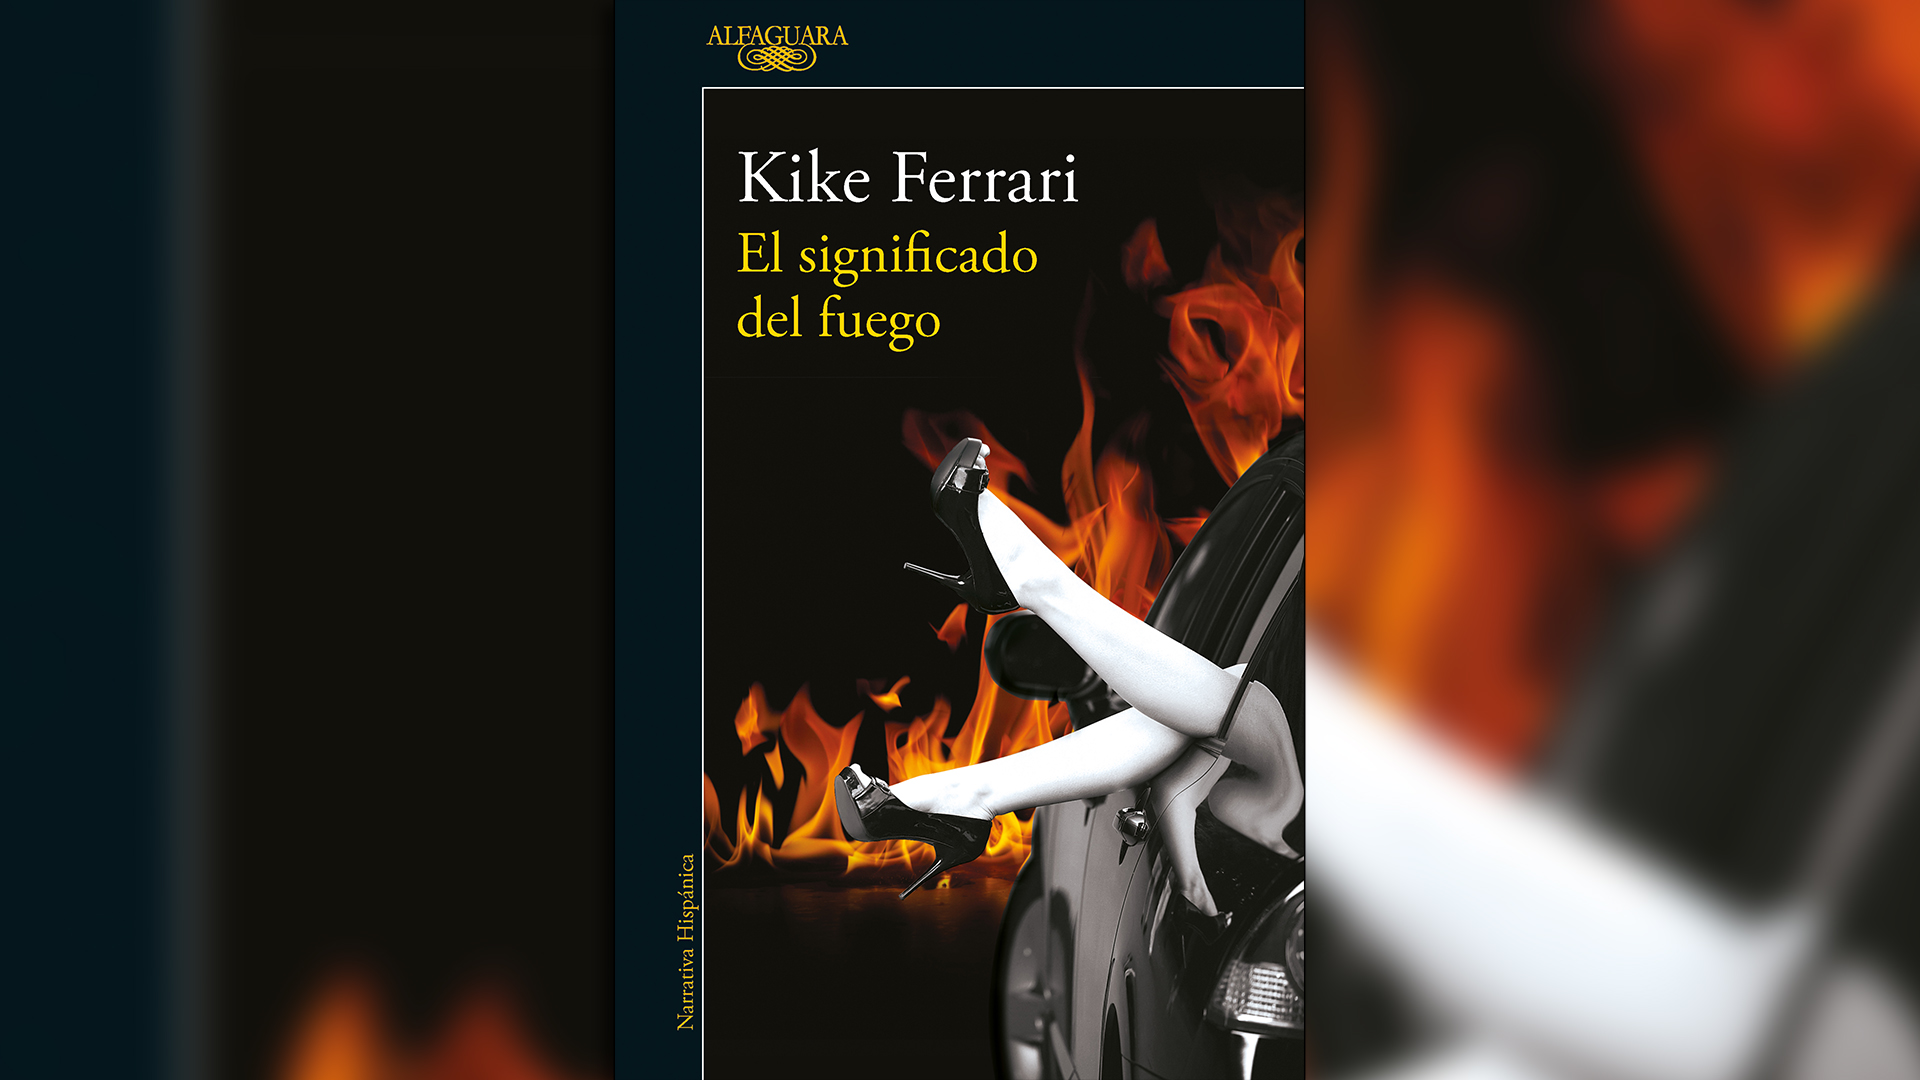 “The meaning of fire" (Alfaguara), by Kike Ferrari